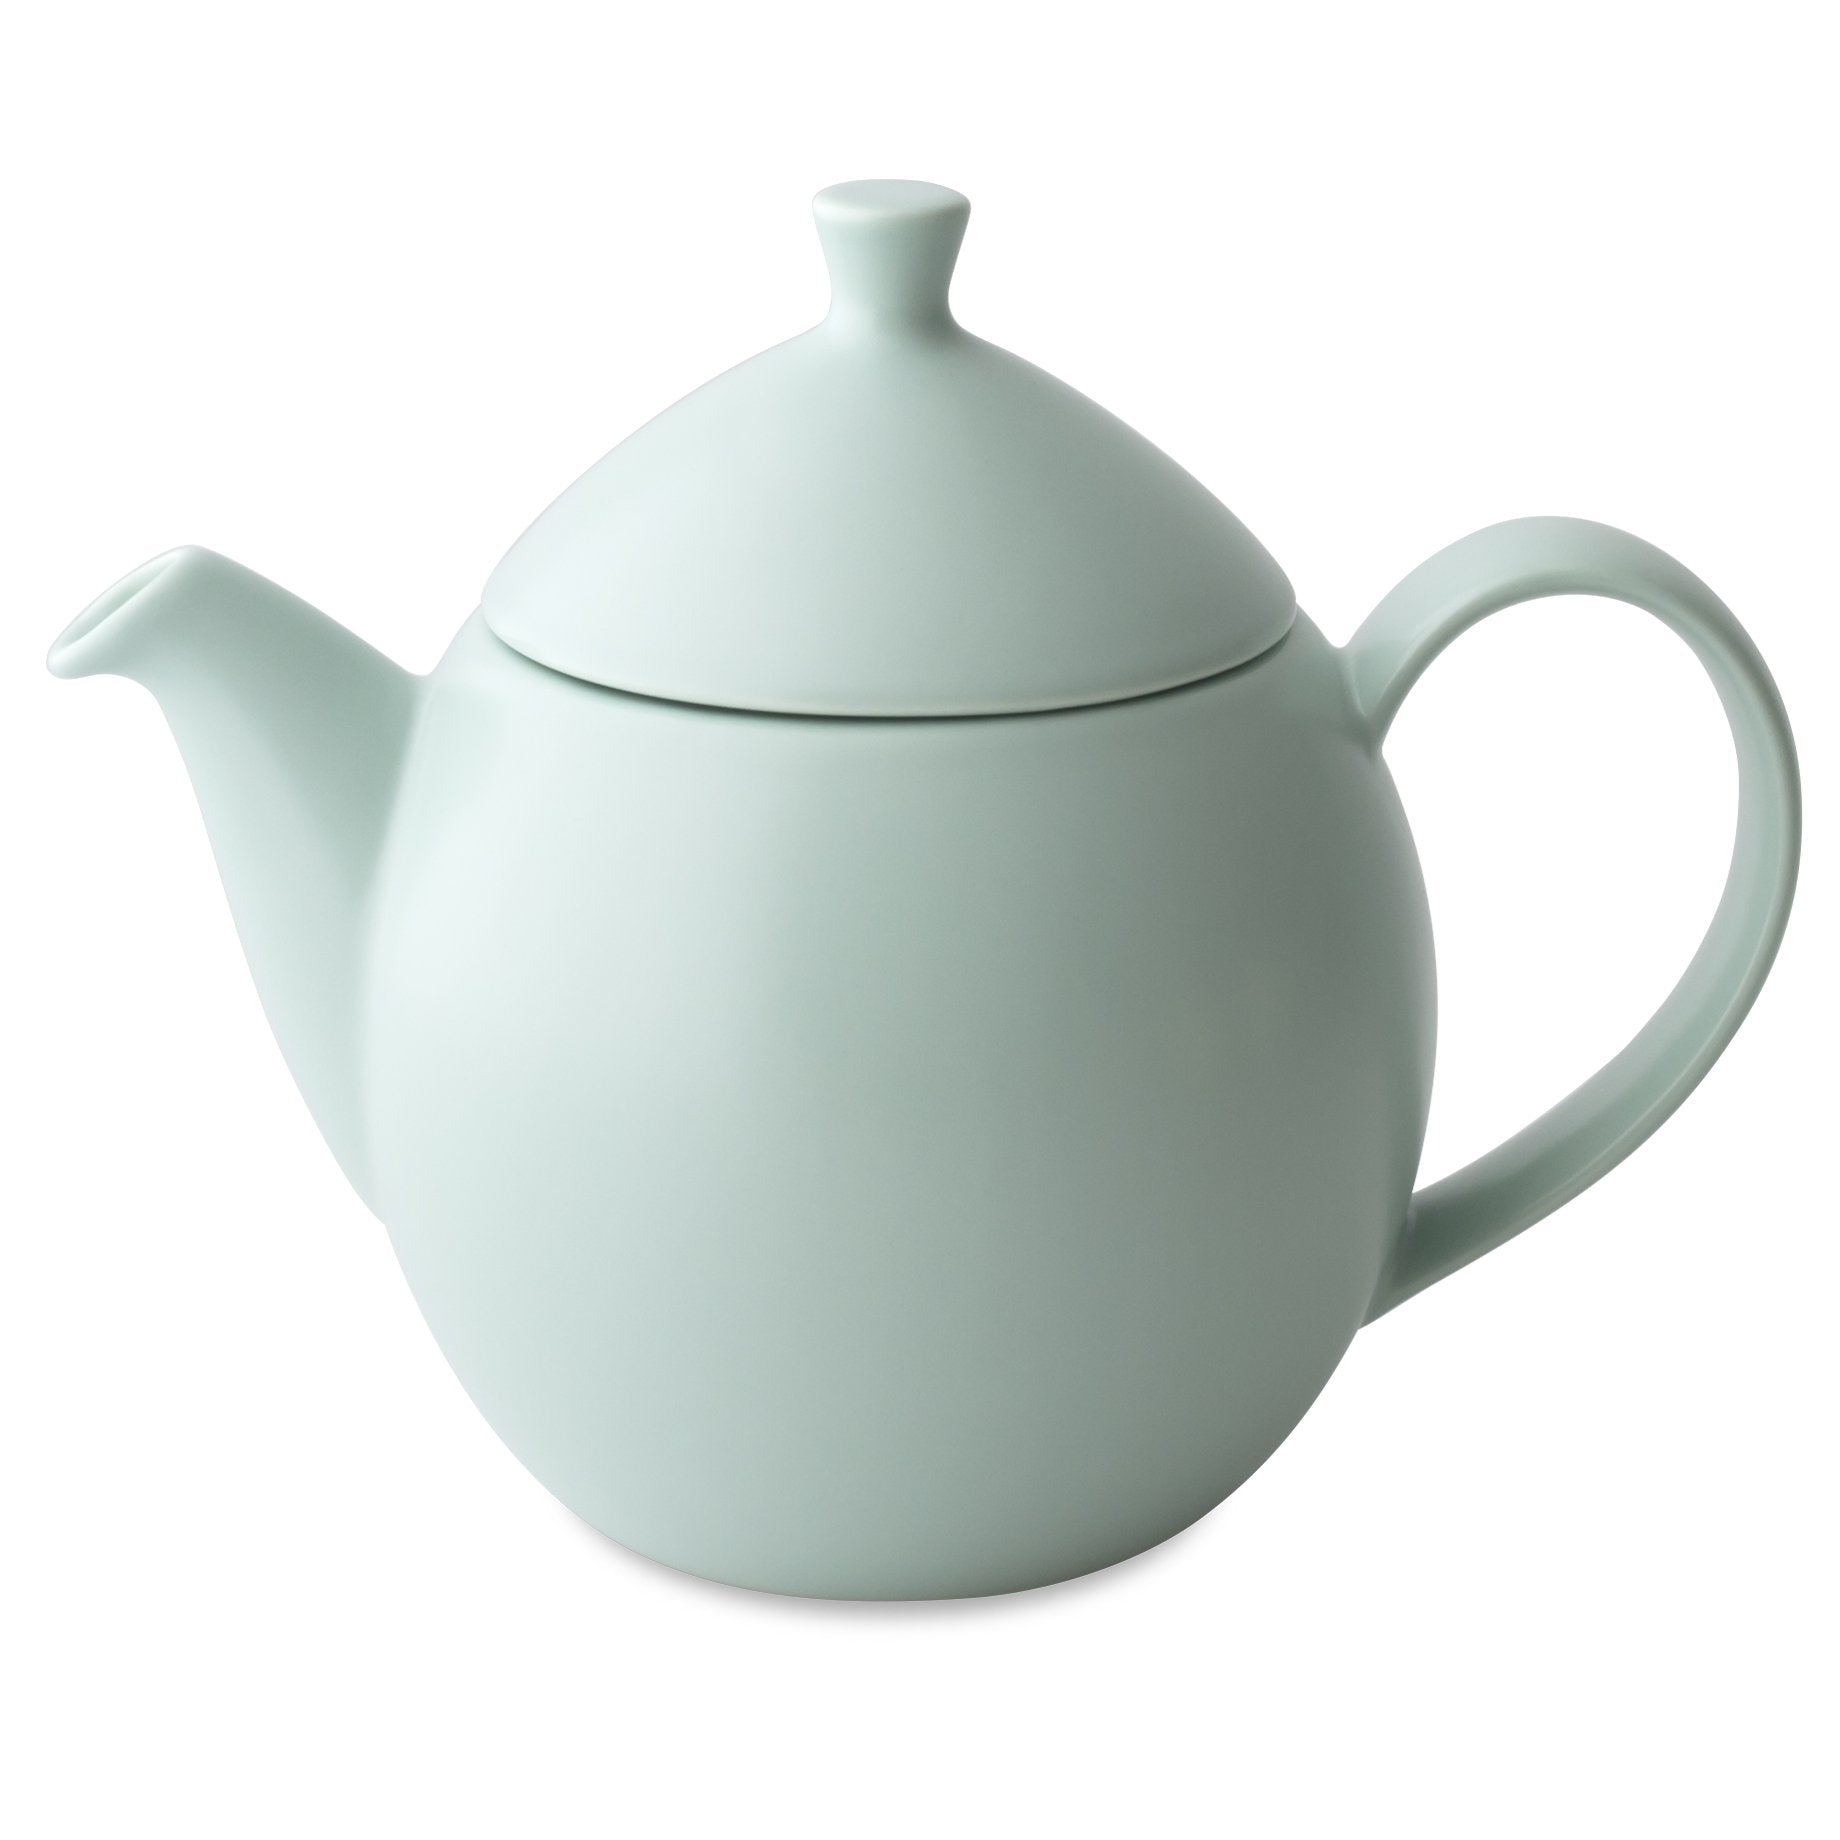 TeaLula 32 oz minty aqua colored satin finish curve Dew Teapot with large thin curve handle and detachable tea pot lid